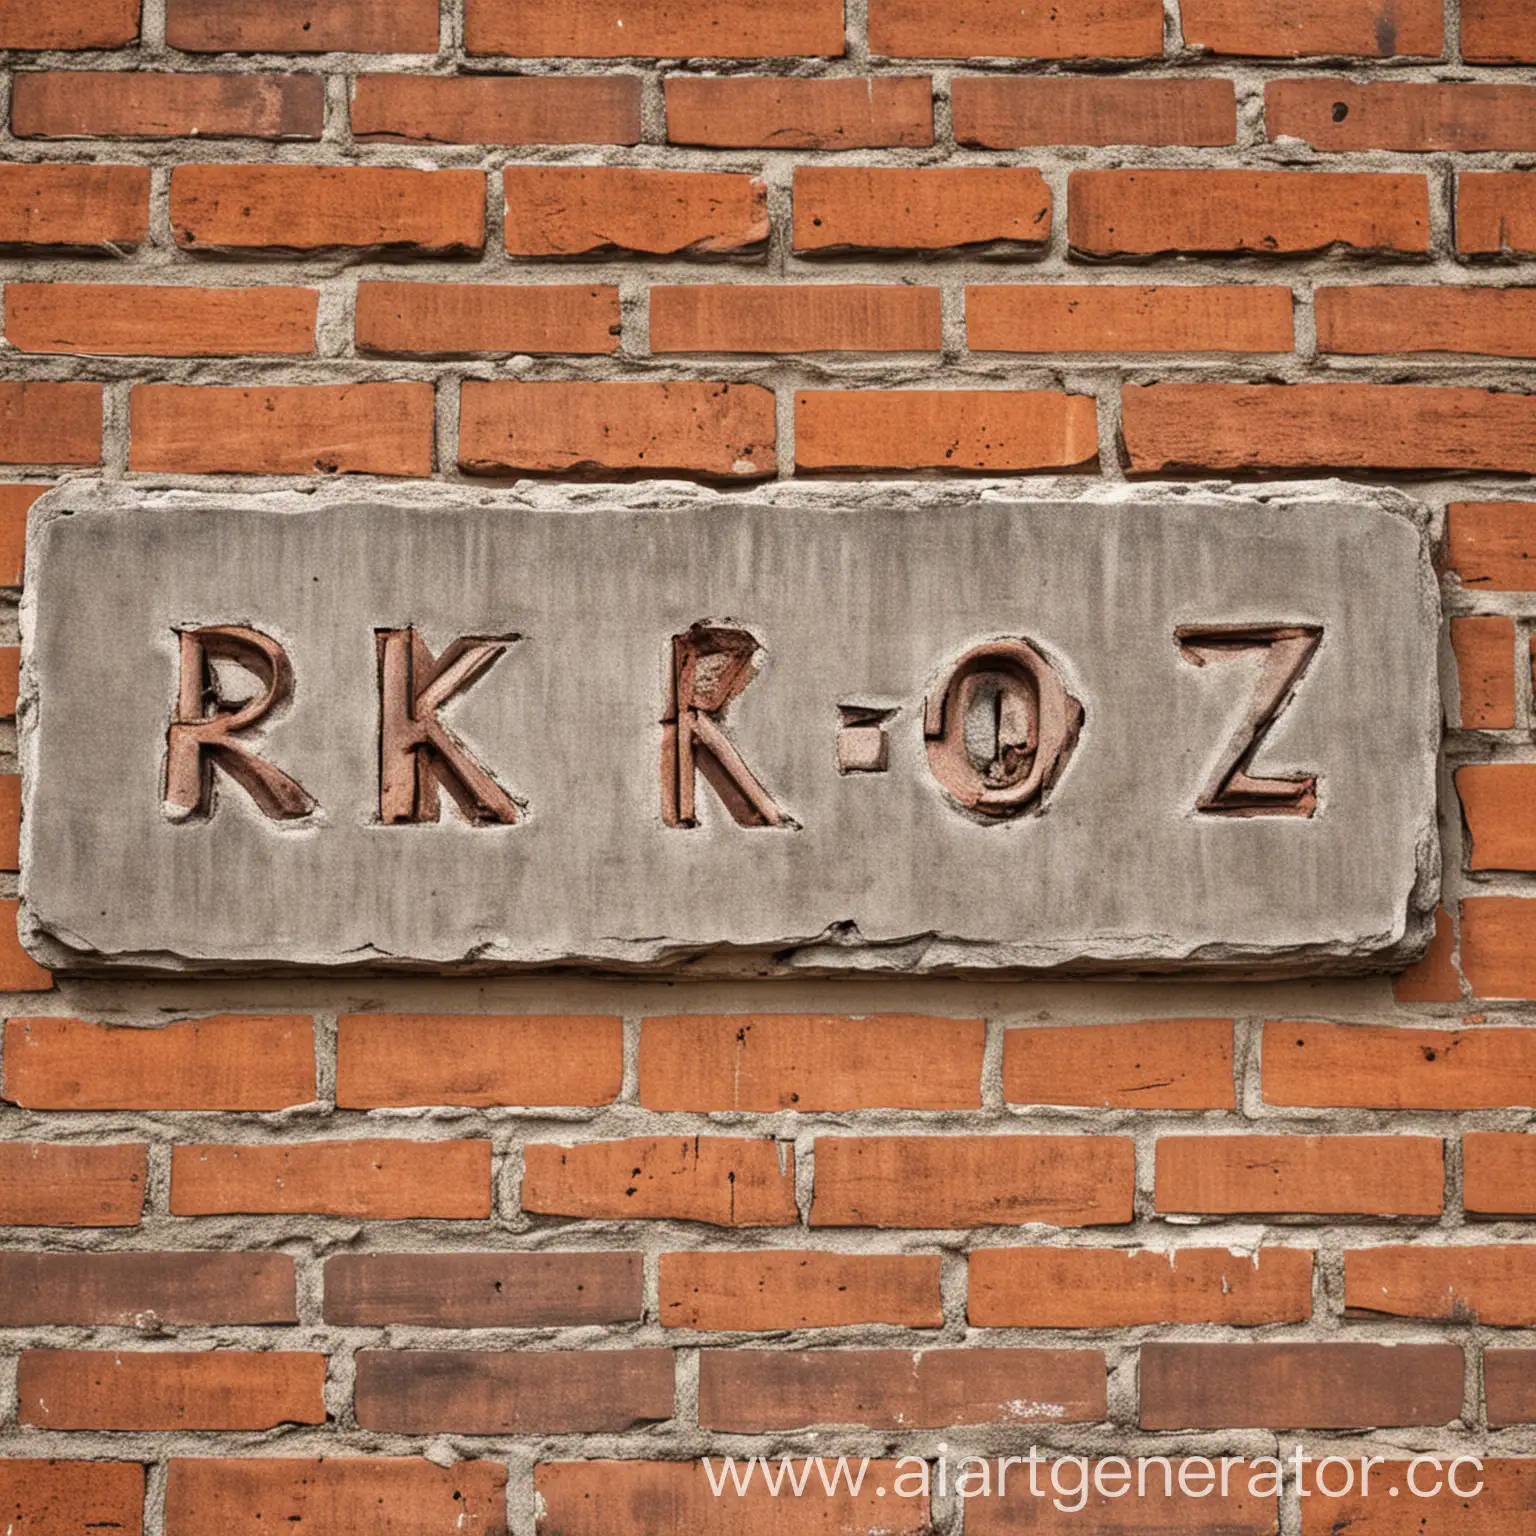 Надпись R K O Z на кирпичной стене